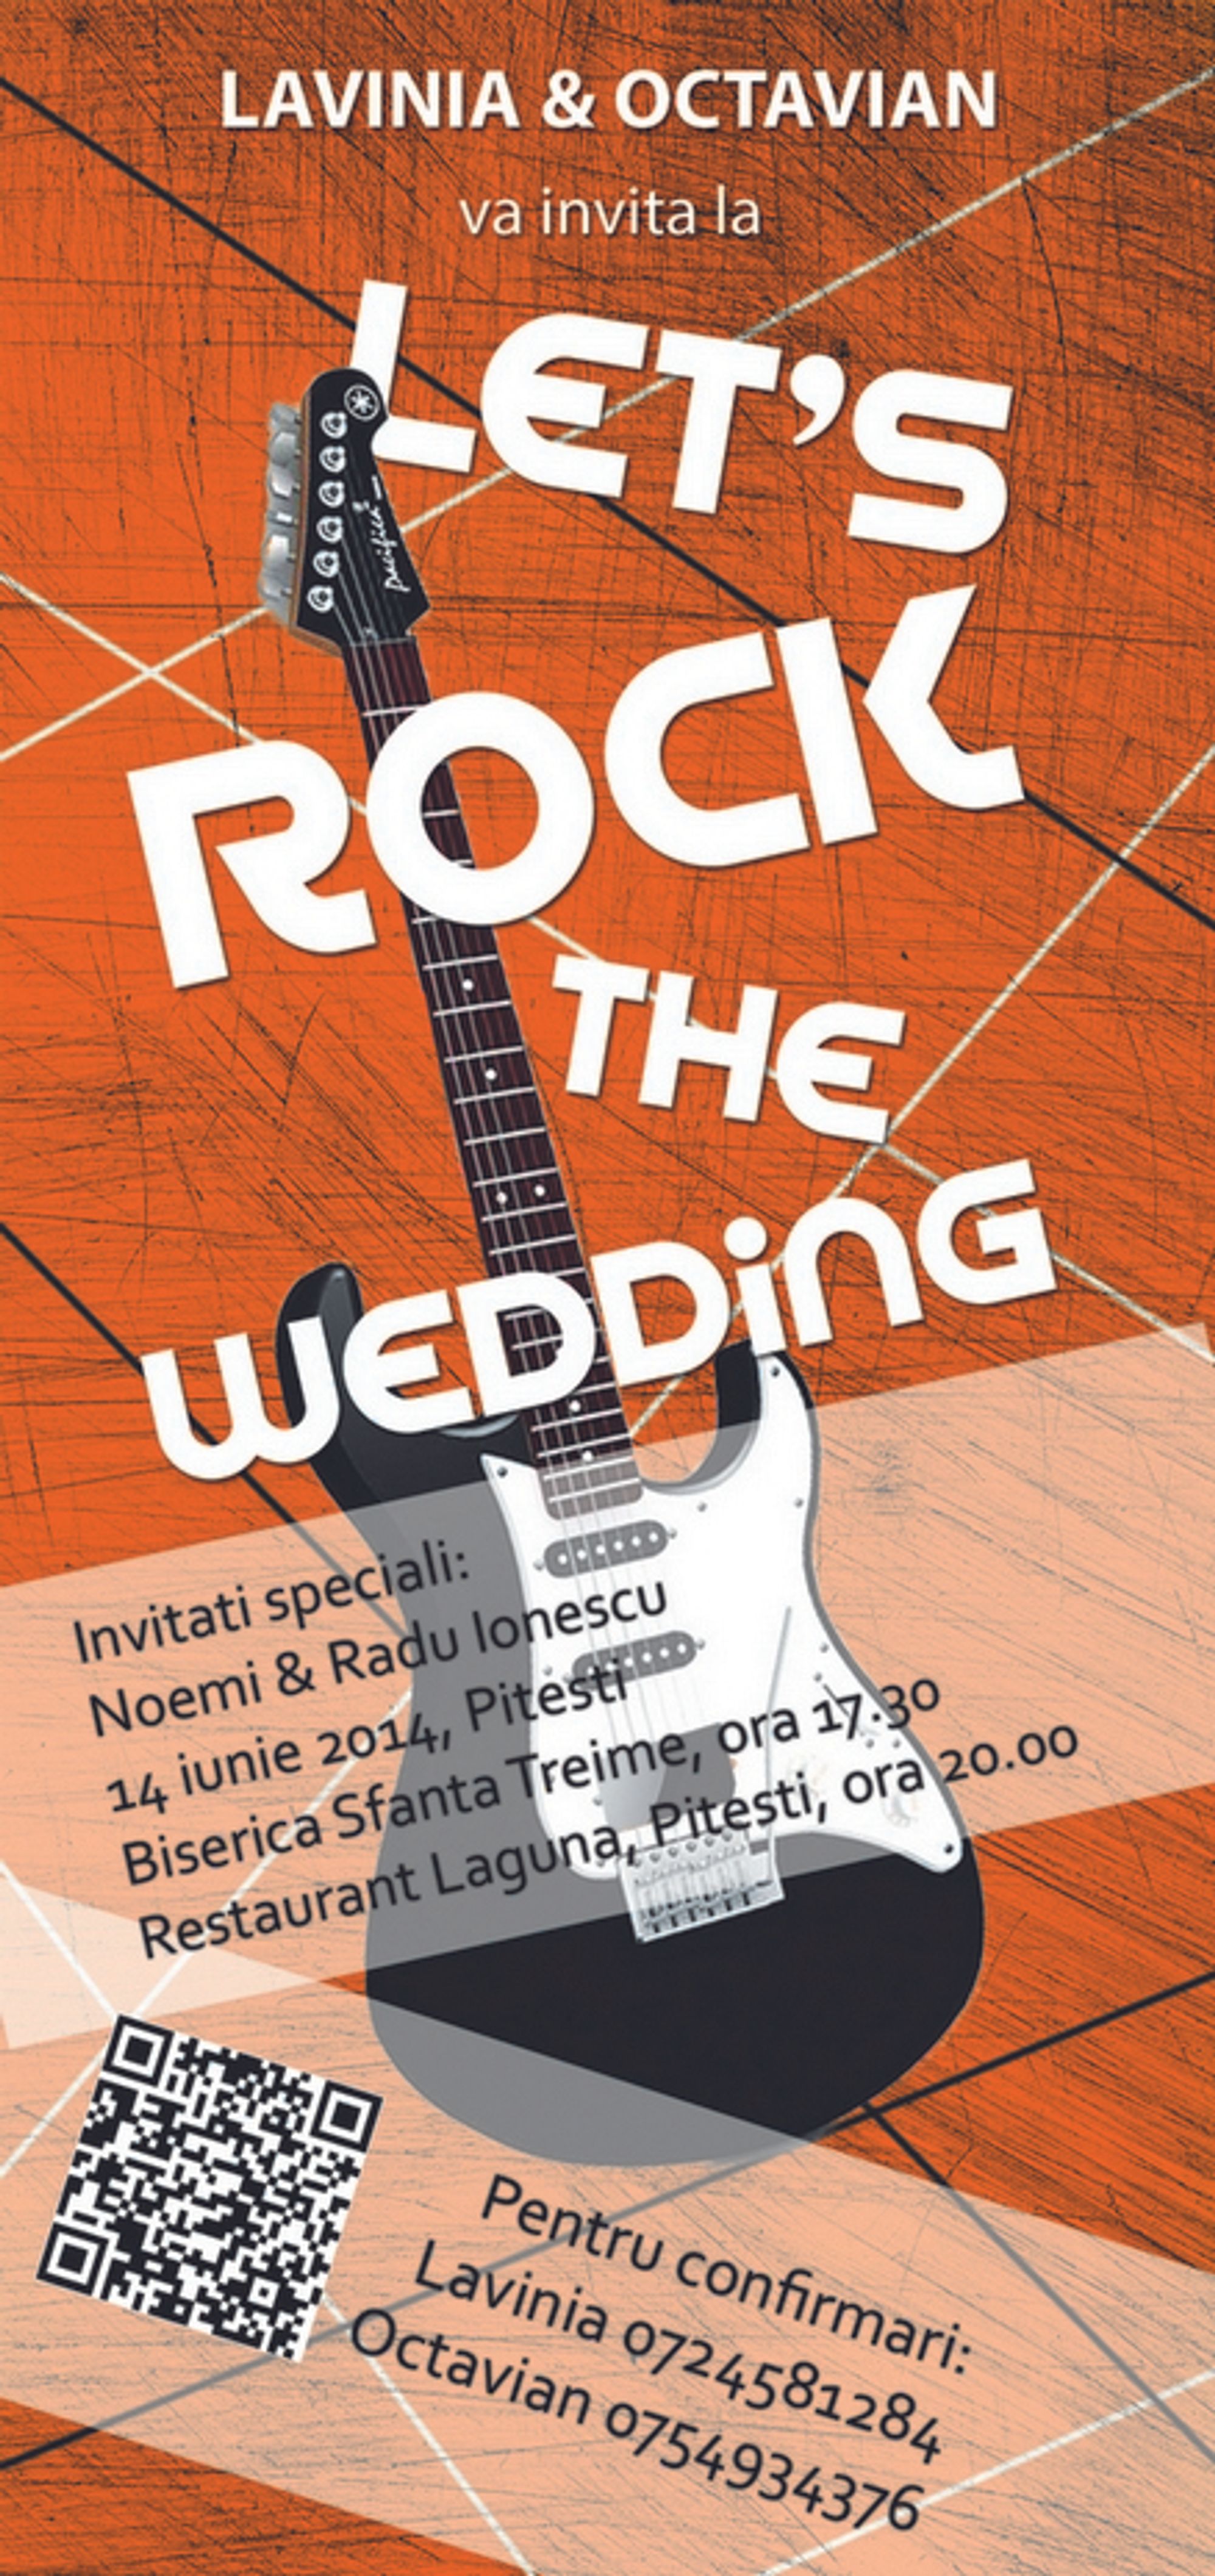 let's rock the wedding